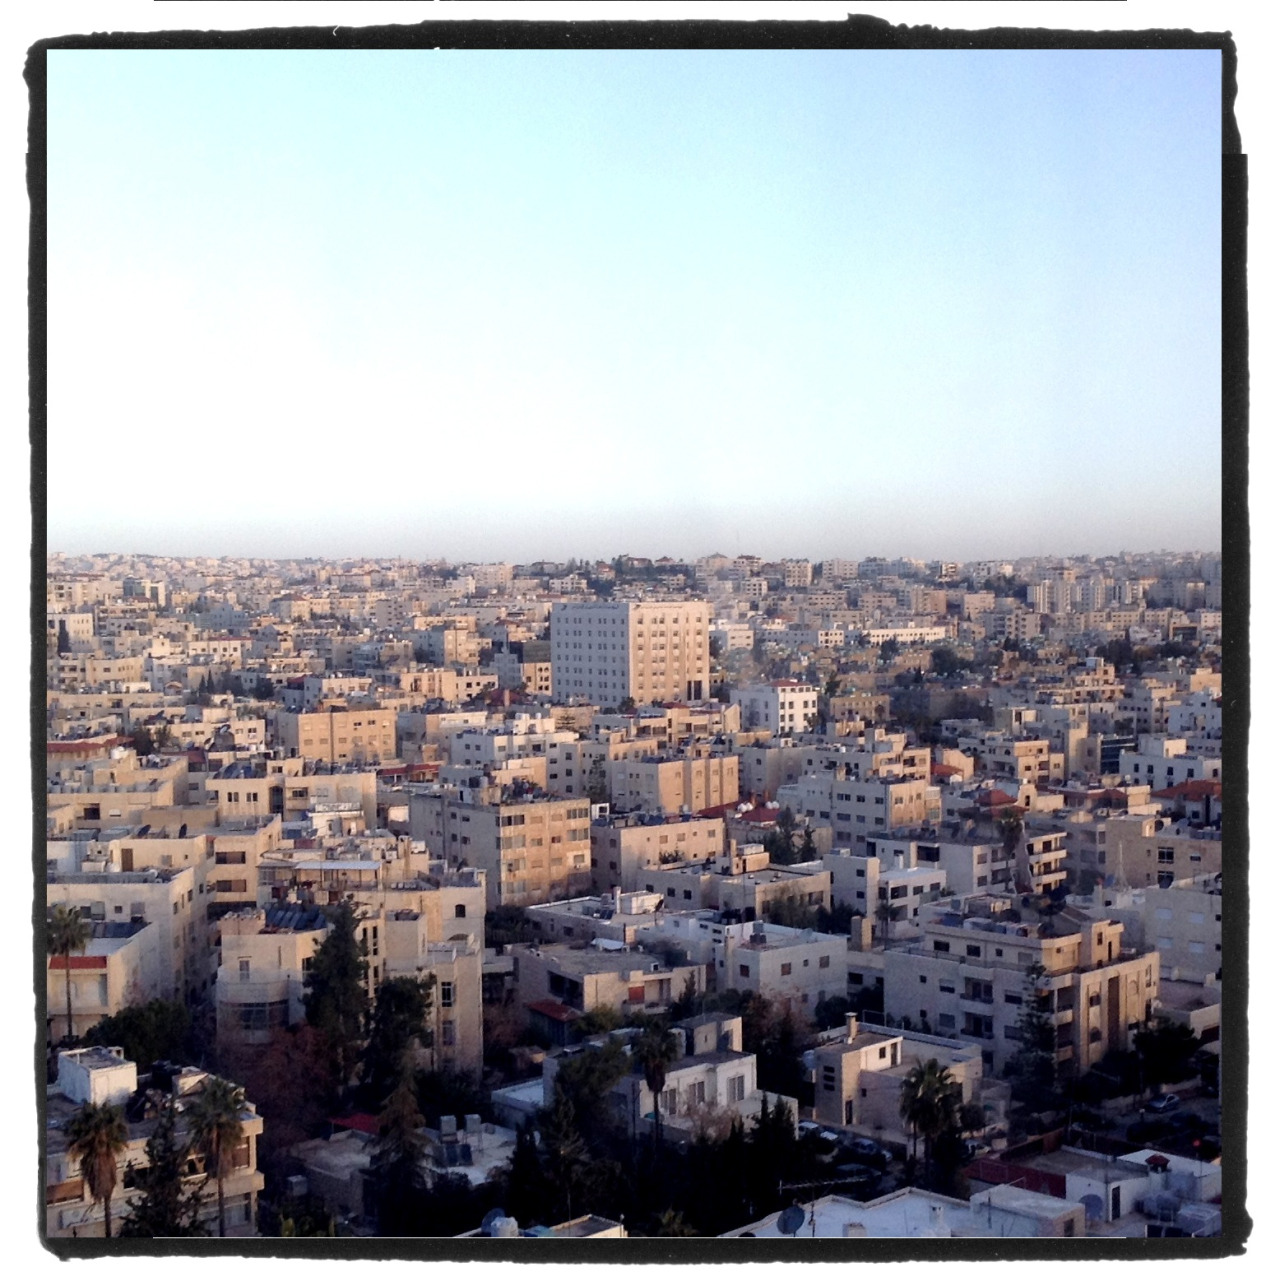 The Lego-like monotony of the Amman, Jordan, cityscape … But still we love the Orientalist light.